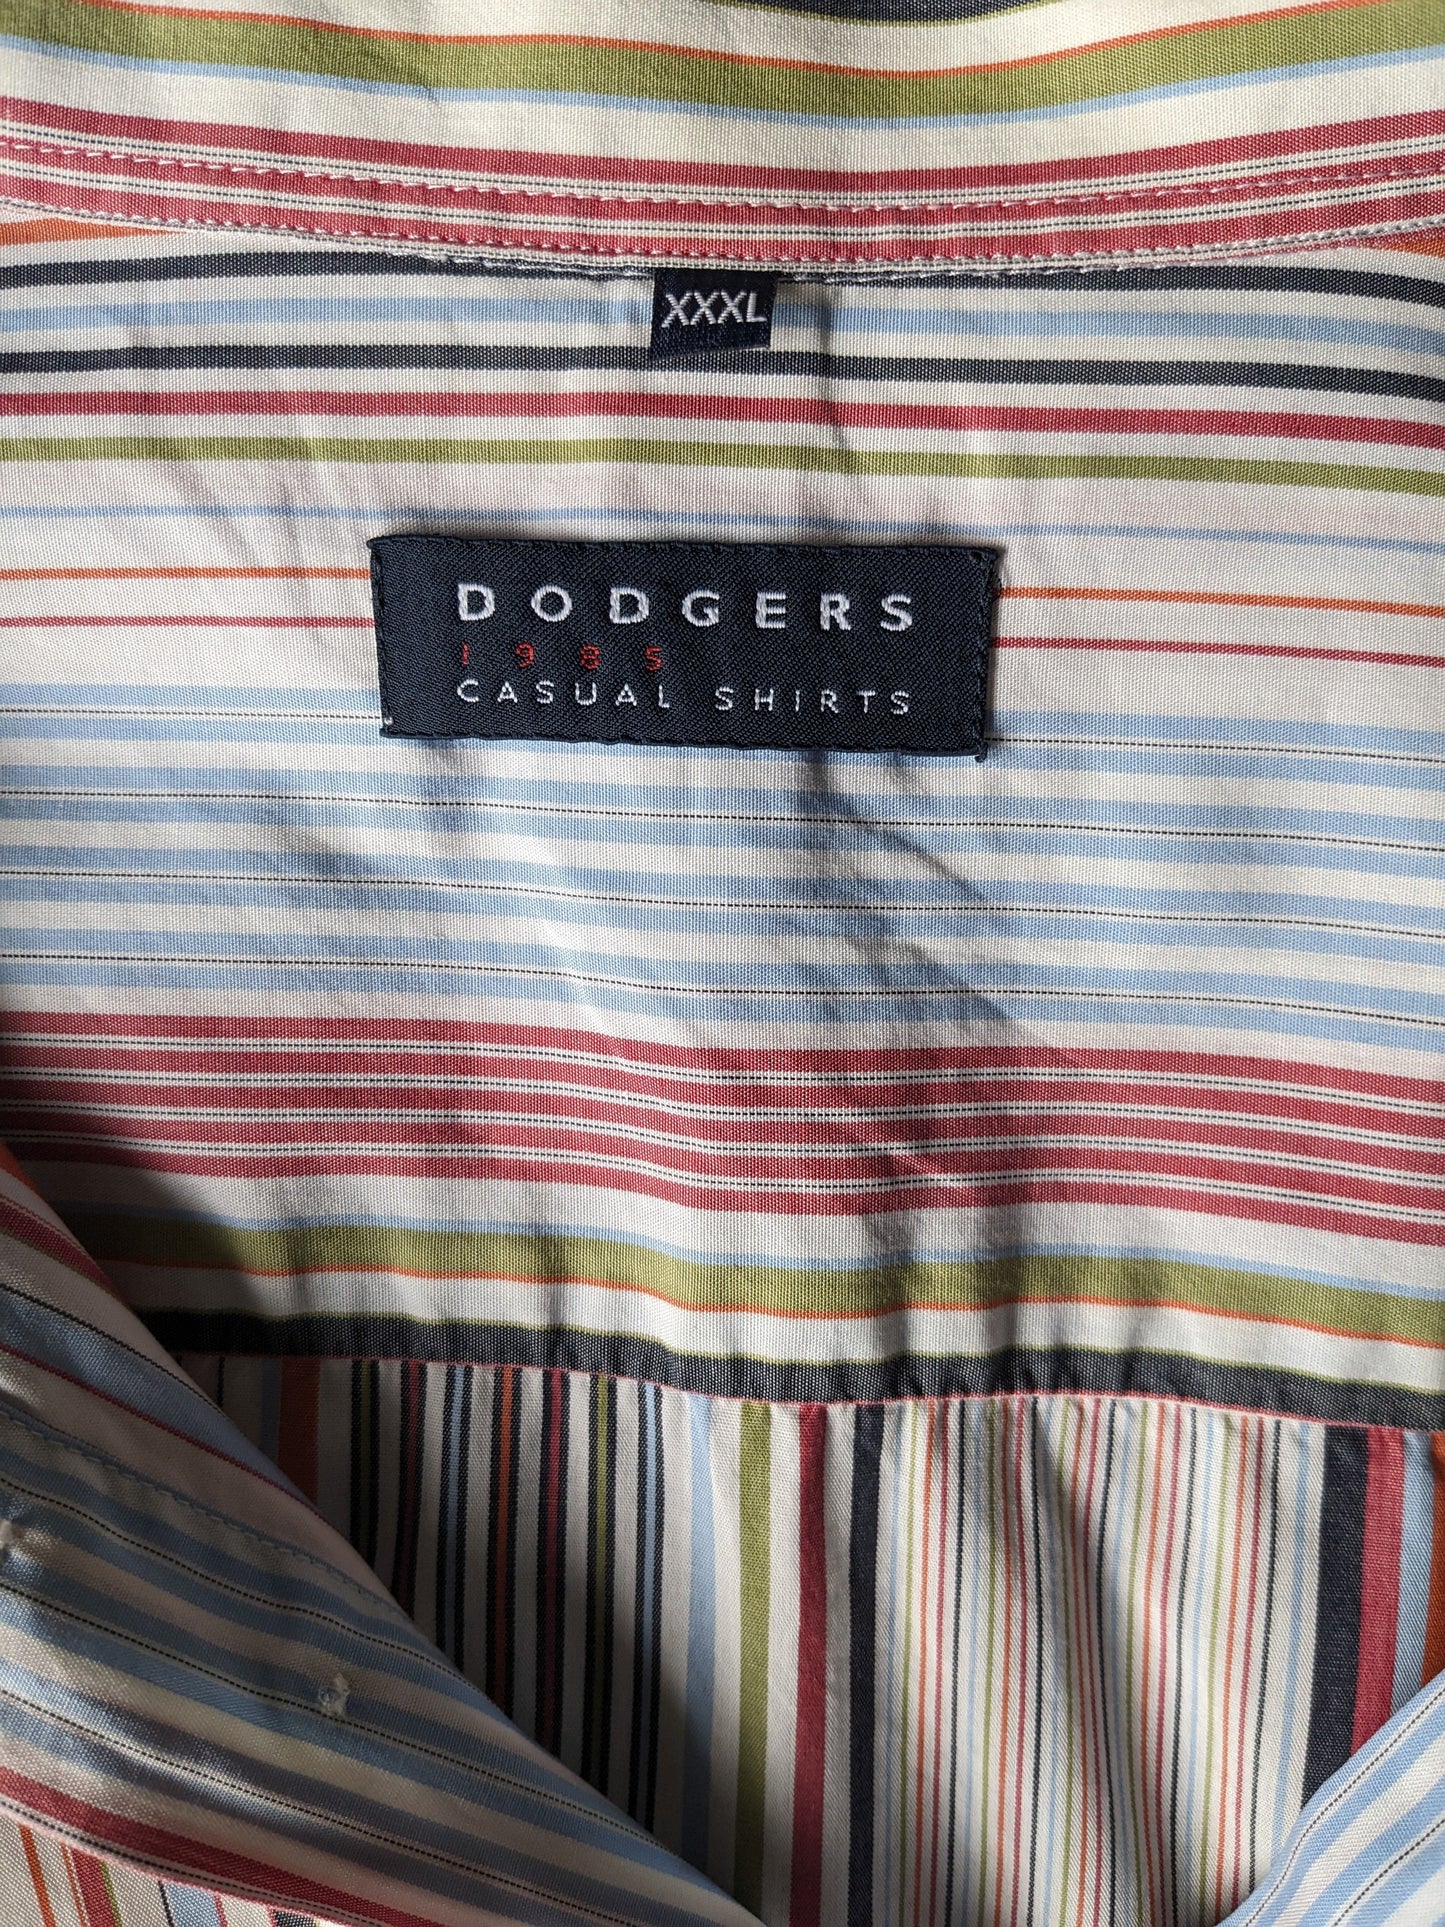 Camisa de los Dodgers manga corta. Motivo a rayas de color. Tamaño 3xl / xxxl.